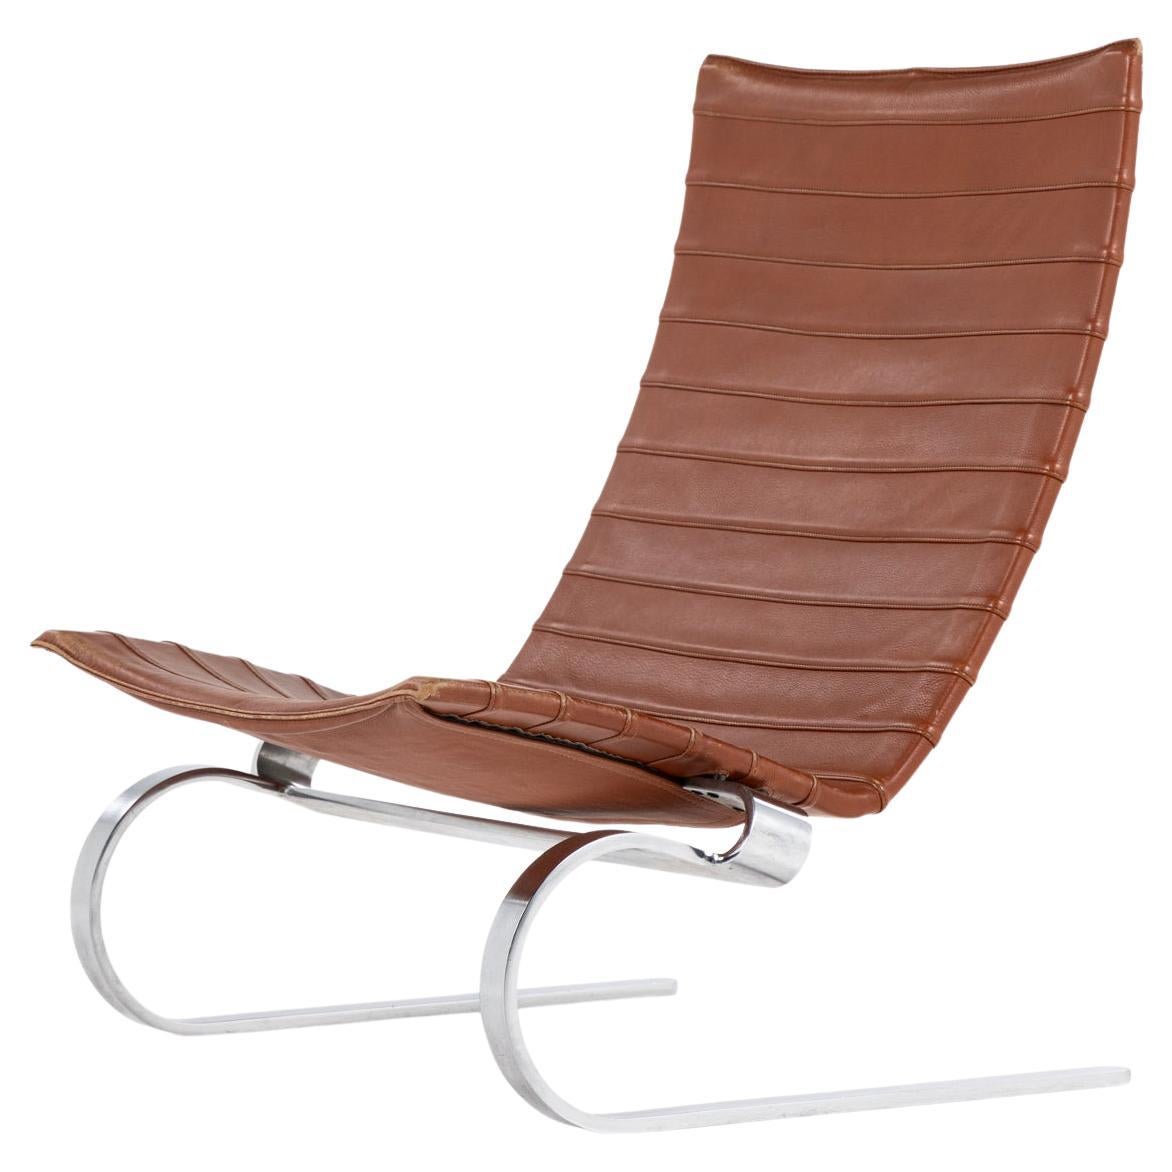 PK 20 easy chair by Poul Kjærholm / E. Kold Christensen. 2 pcs. in stock.